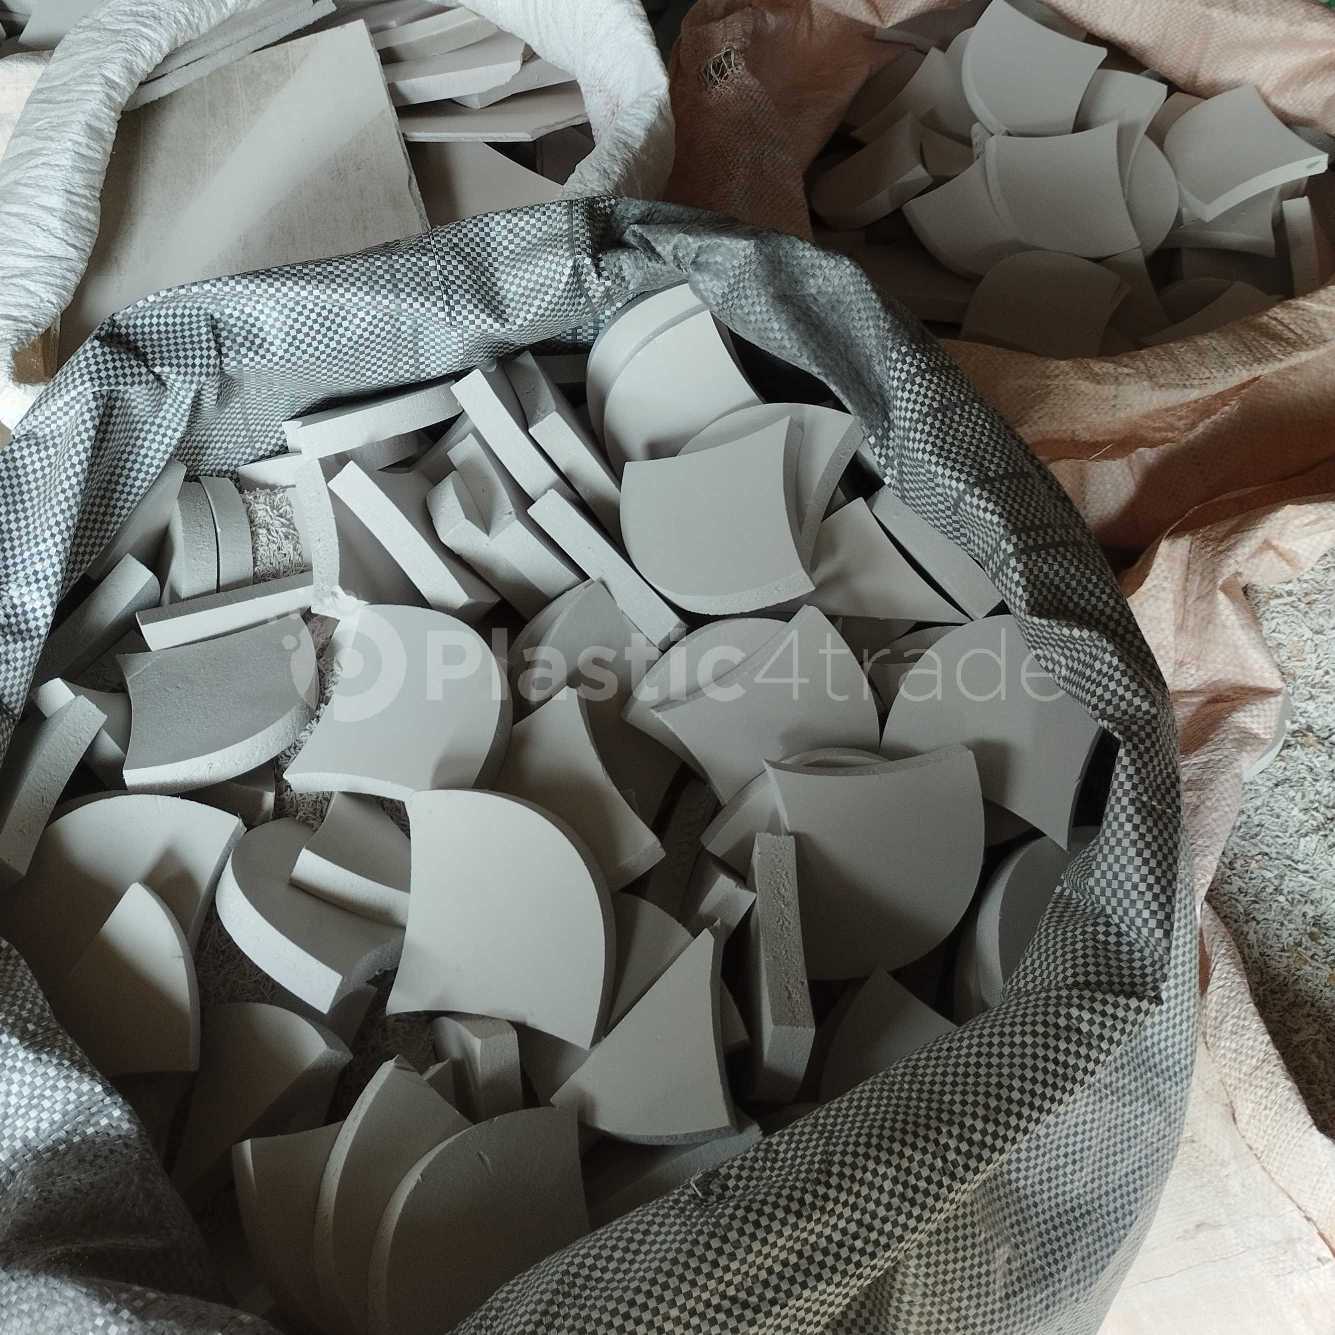 ACRYLIC SCRAP ACRYLIC Scrap Roto Molding uttar pradesh india Plastic4trade